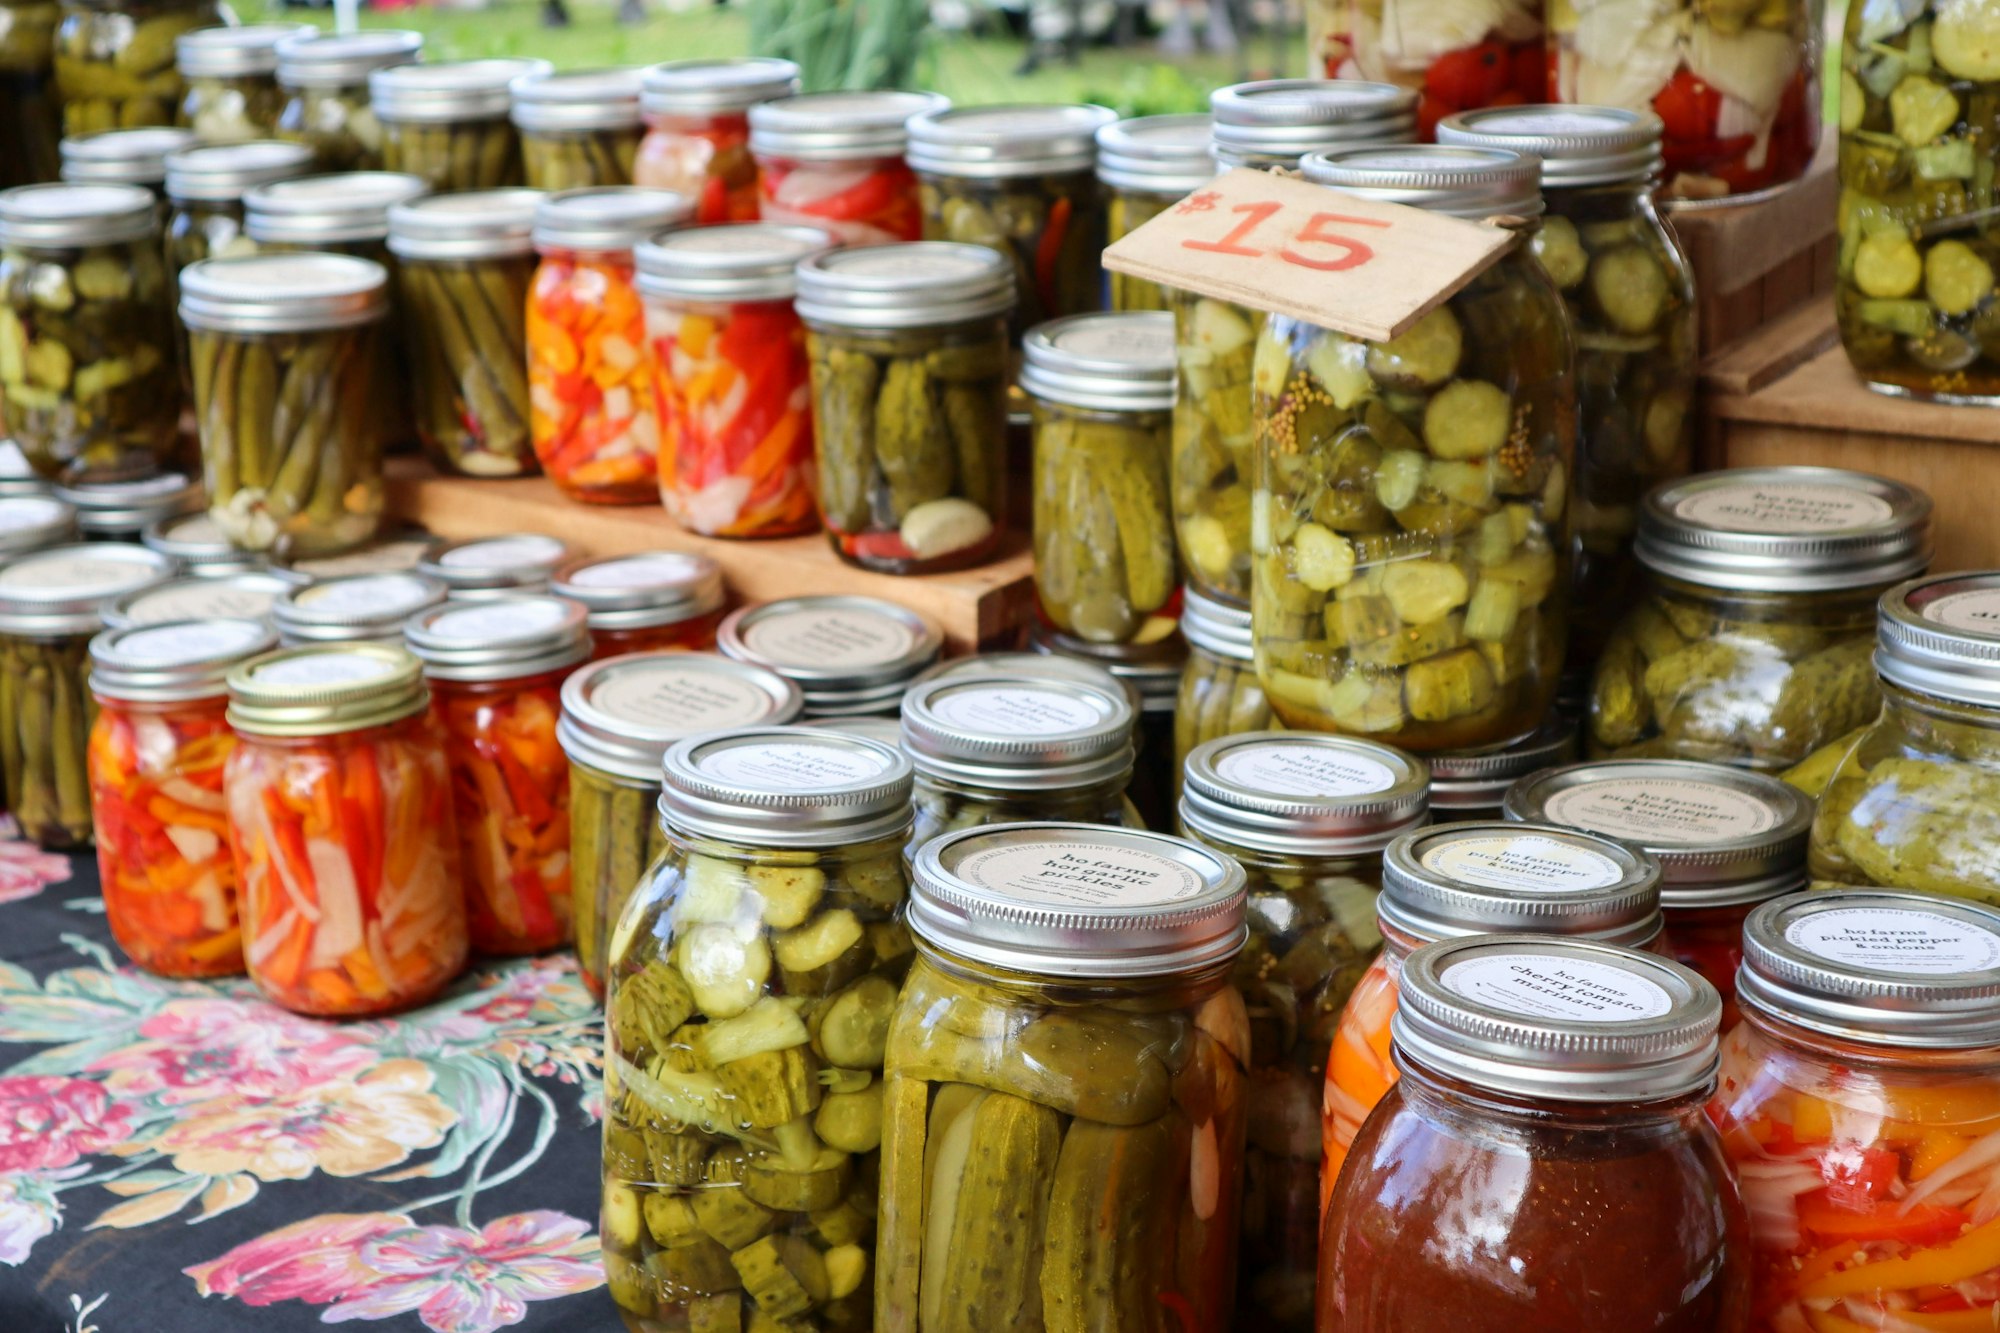 ho farms pickled goods (http://hofarmshawaii.com/)